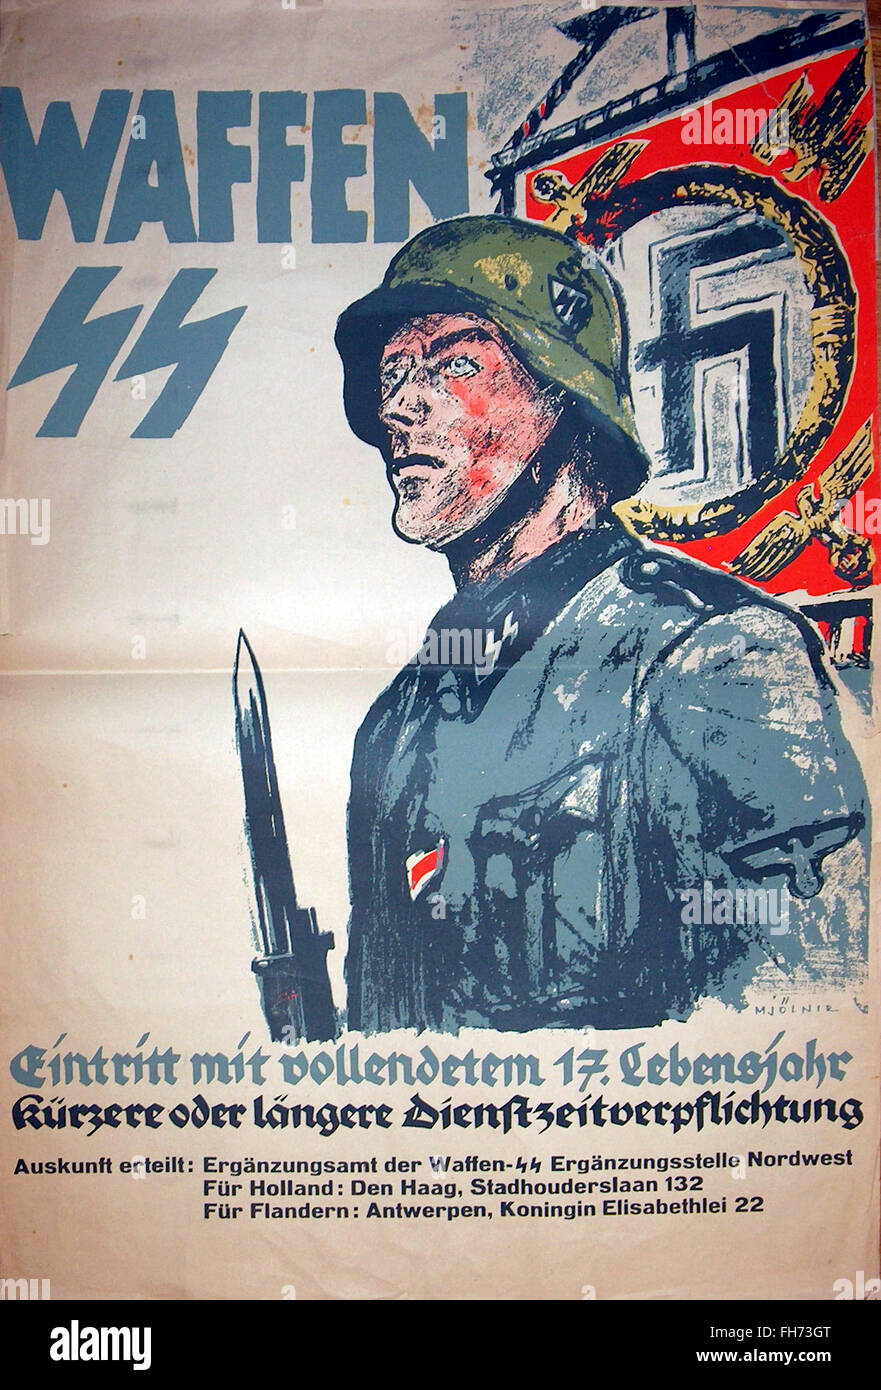 Waffen SS - Affiche de propagande nazie allemande - WWII Banque D'Images